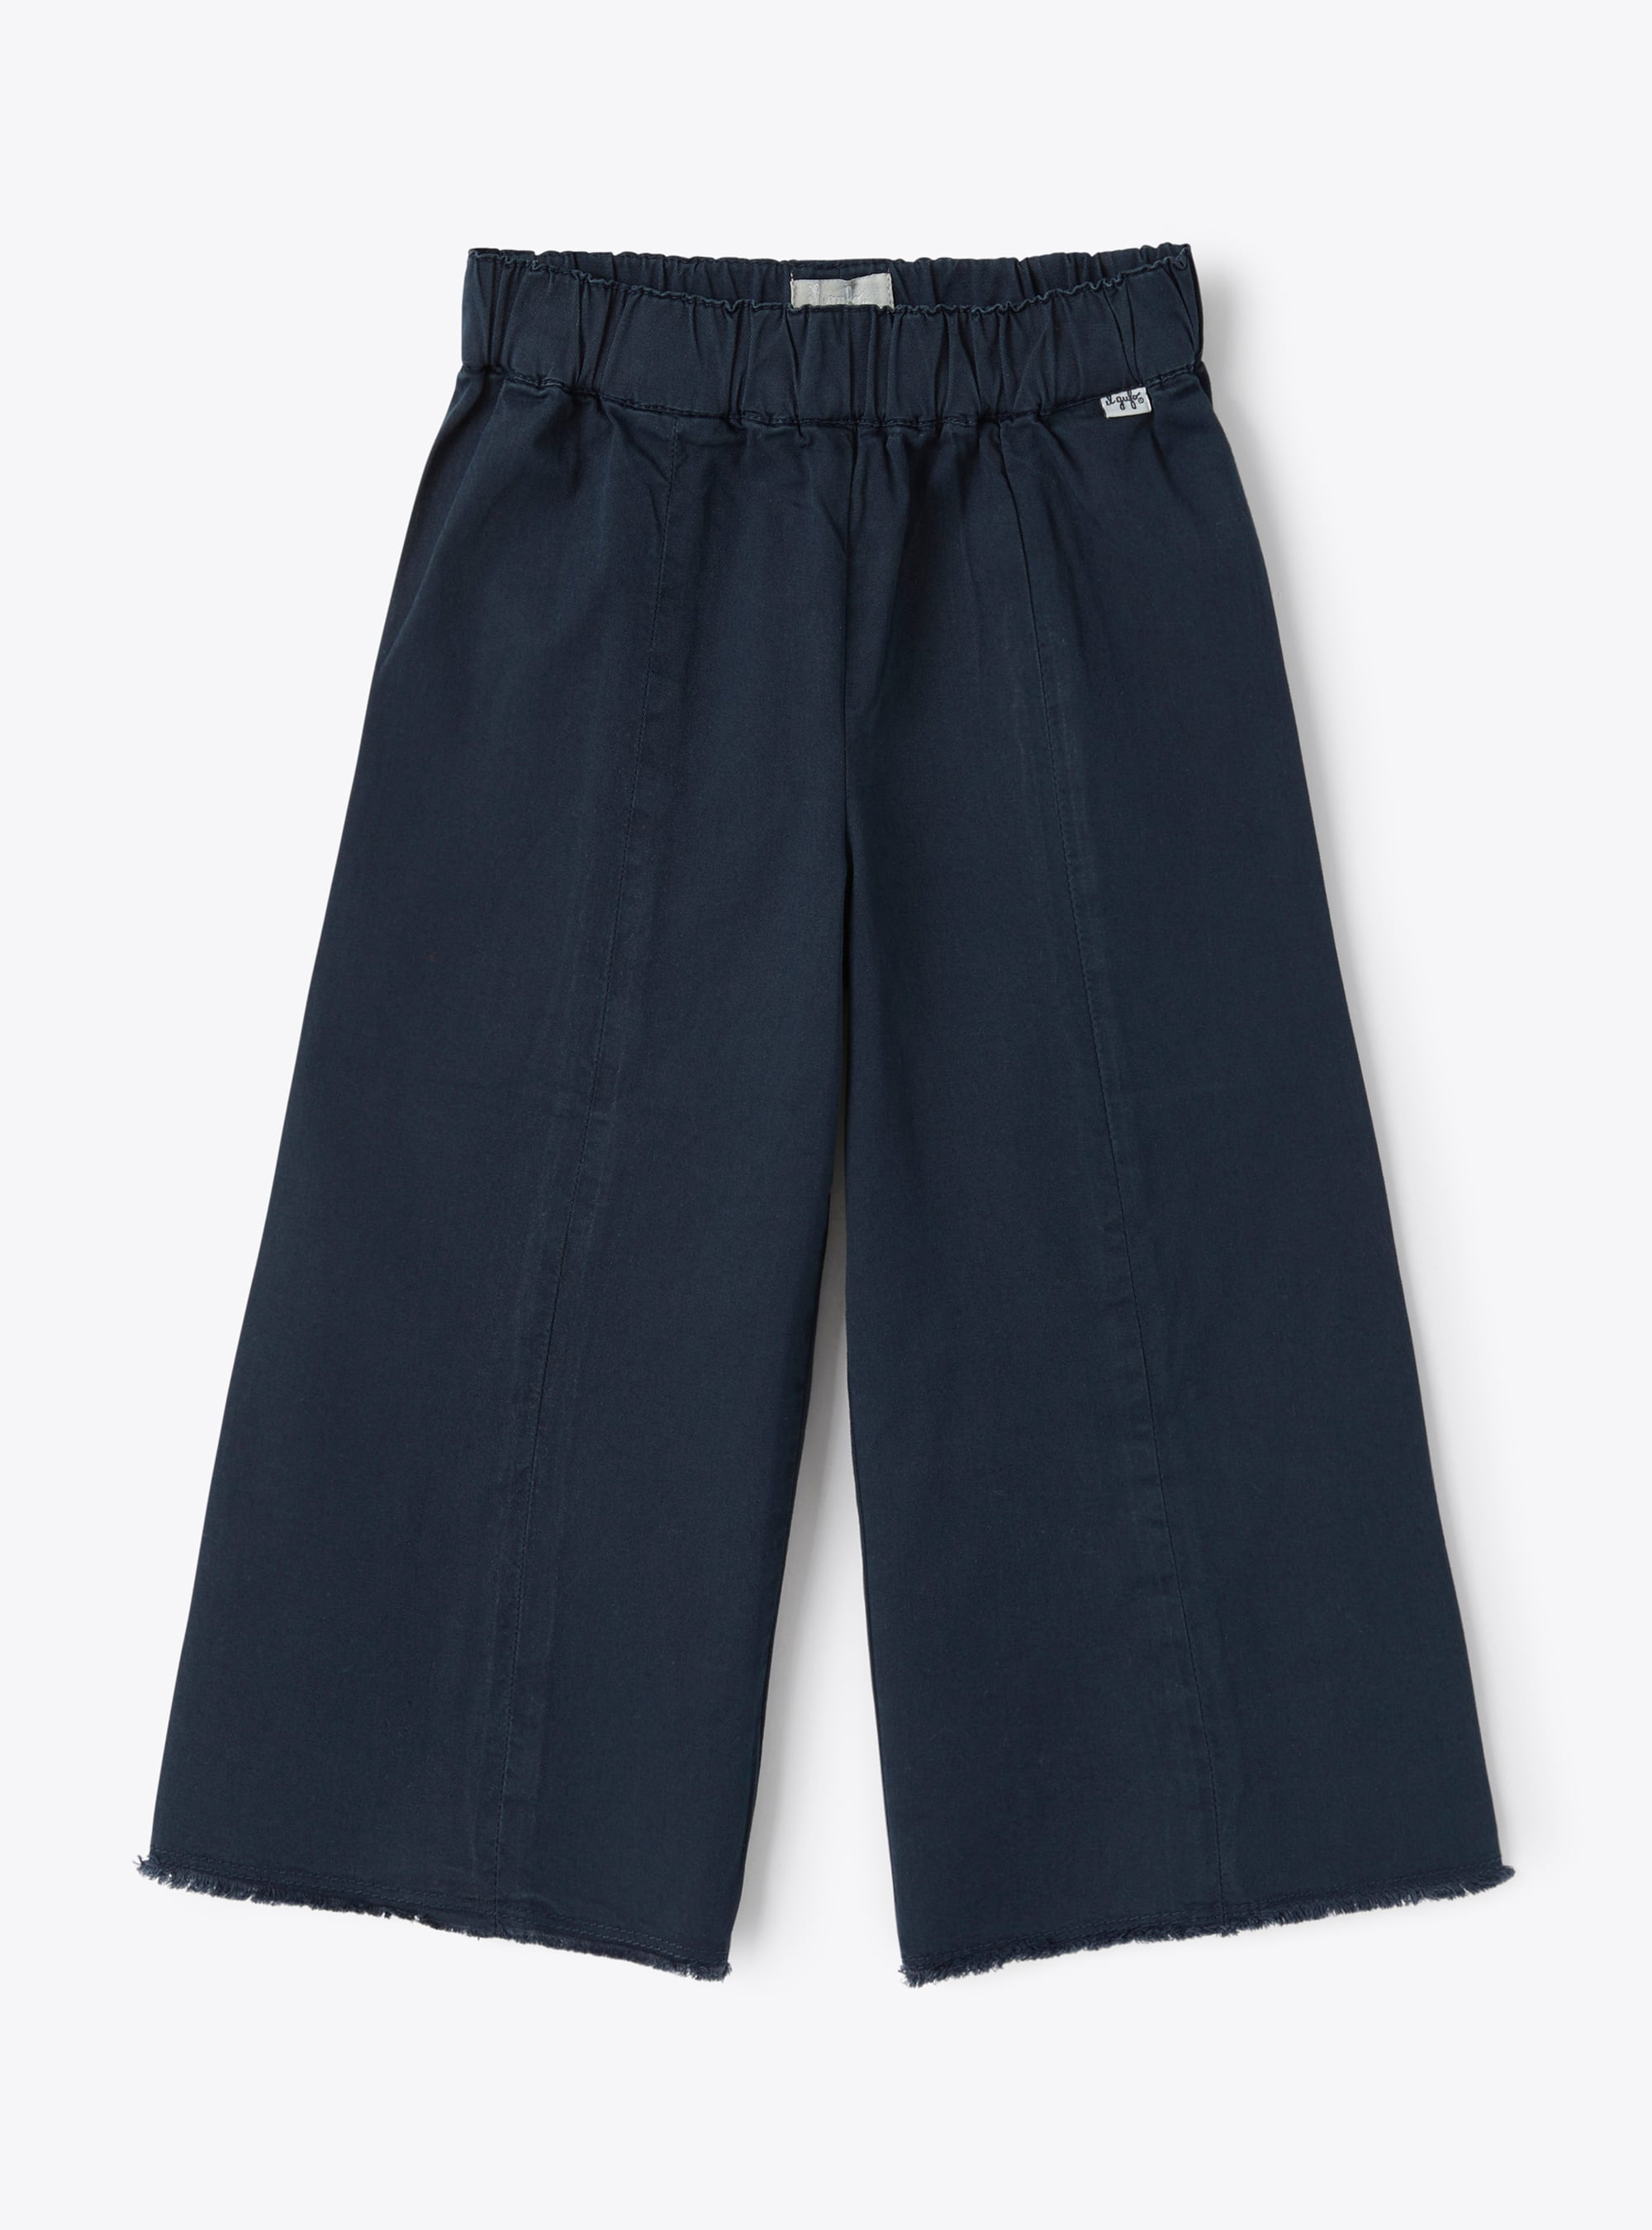 Capri pants in blue gabardine - Trousers - Il Gufo